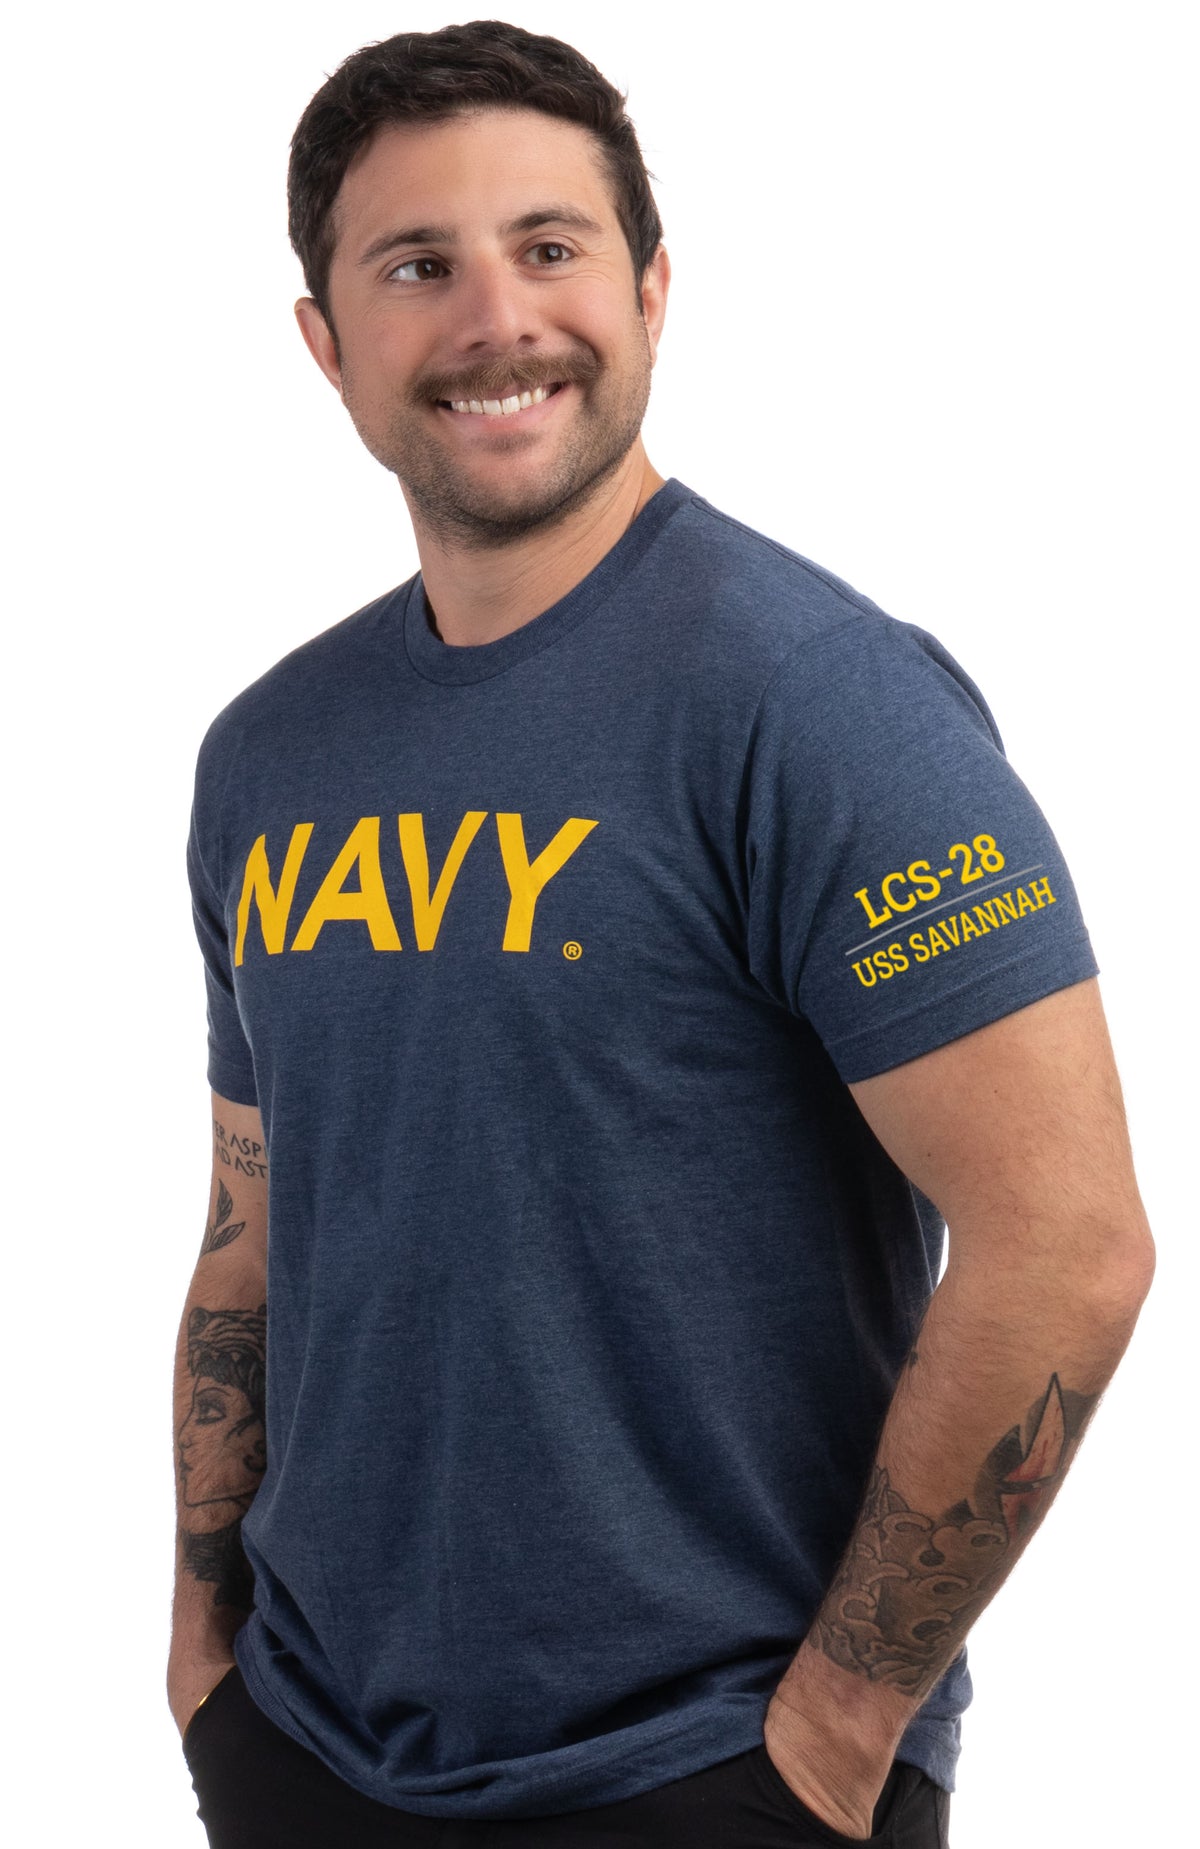 USS Savannah, LCS-28 | U.S. Navy Sailor Veteran USN United States Naval T-shirt for Men Women